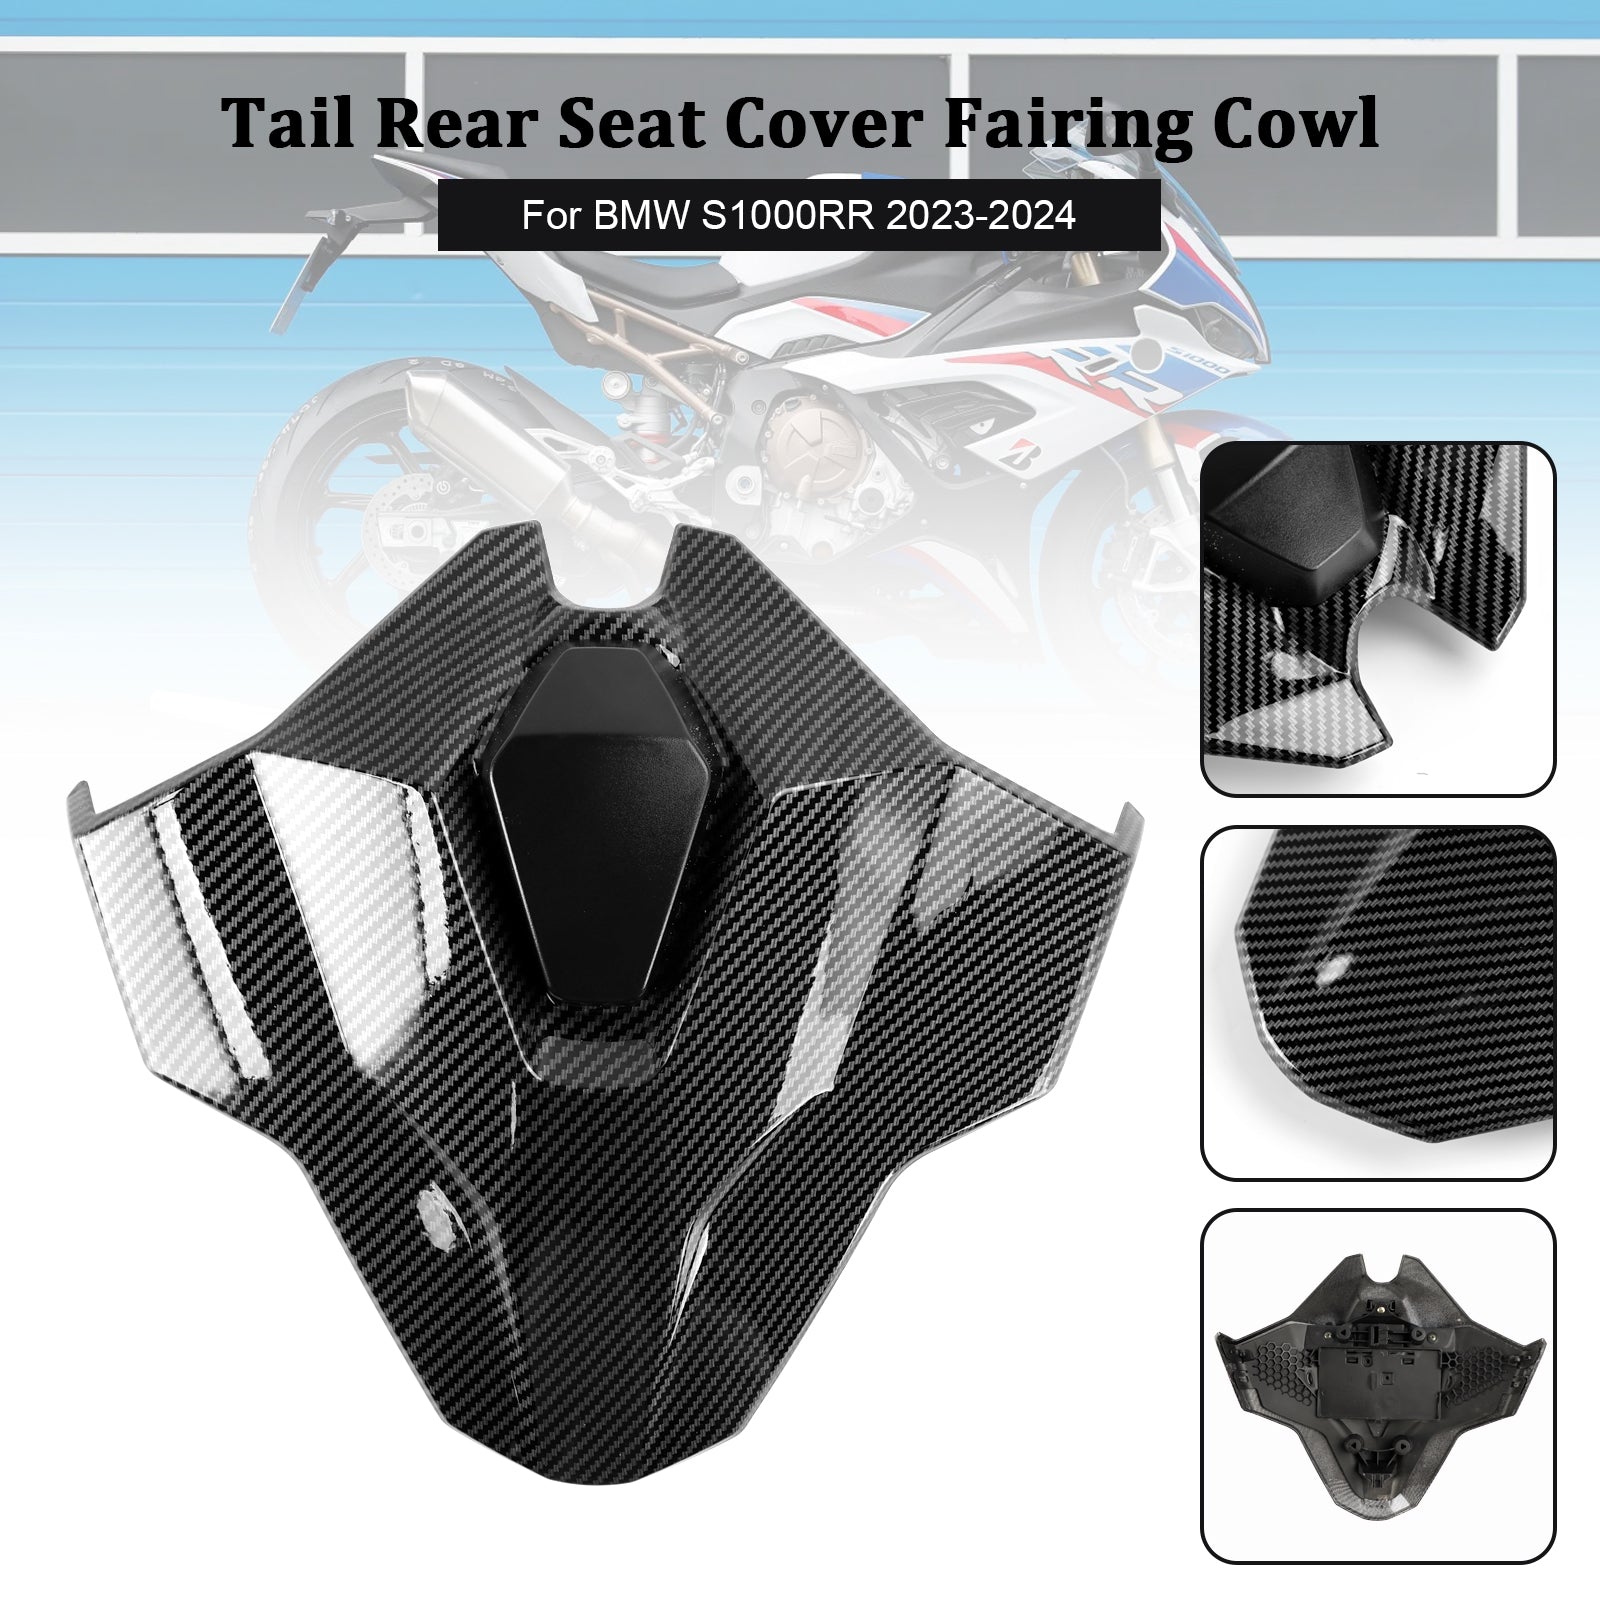 23-24 BMW S1000RR Tail Rear Seat Cover Fairing Cowl